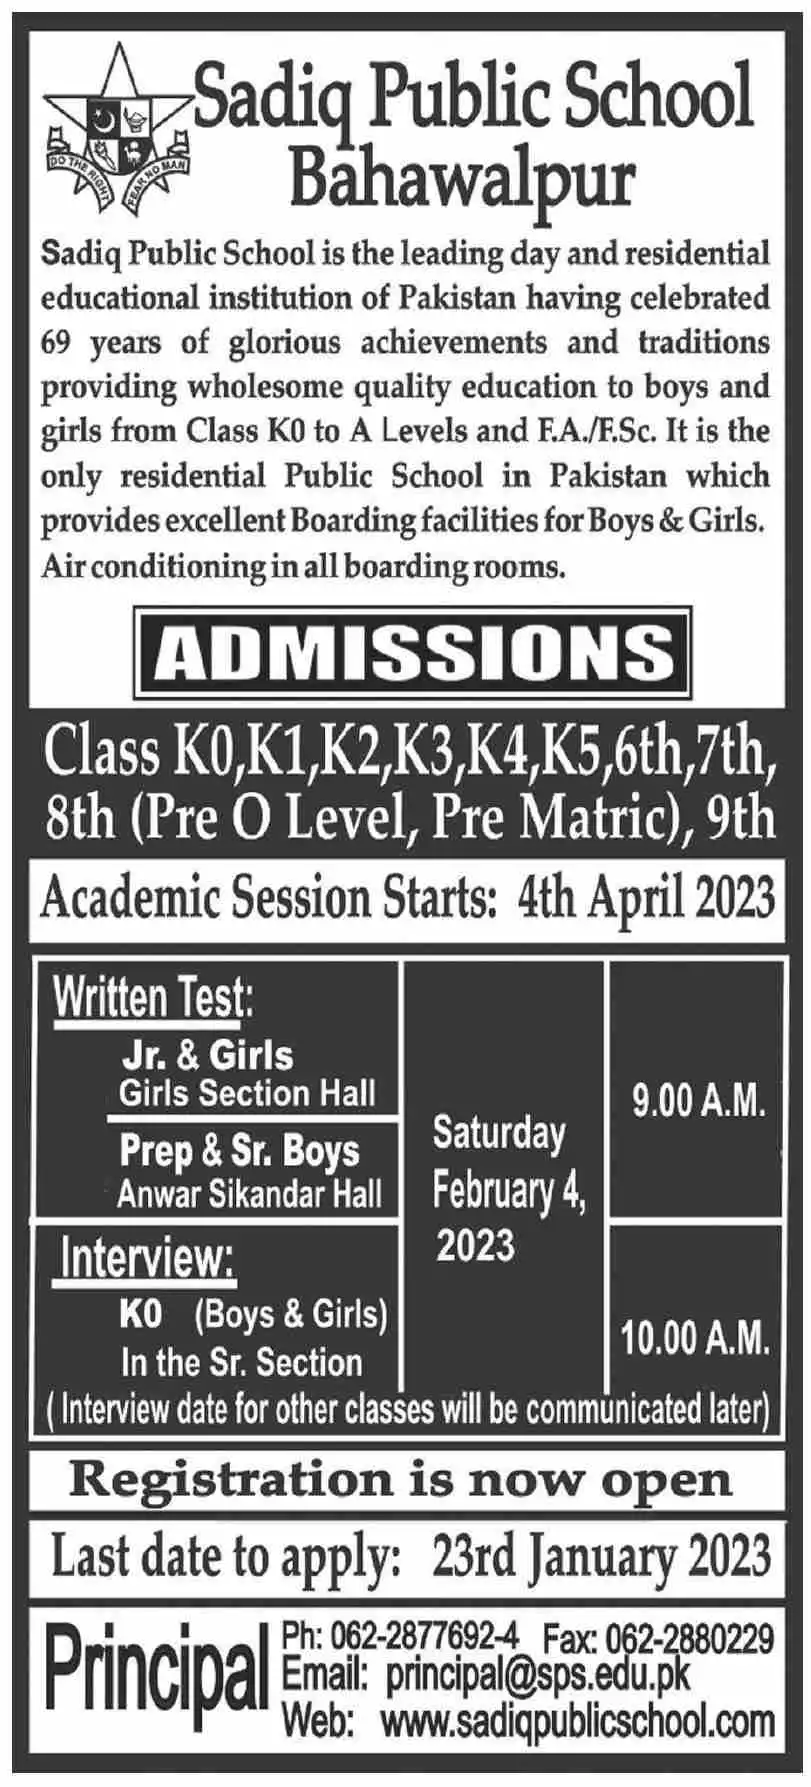 Sadiq Public School Bahawalpur Admission 2023